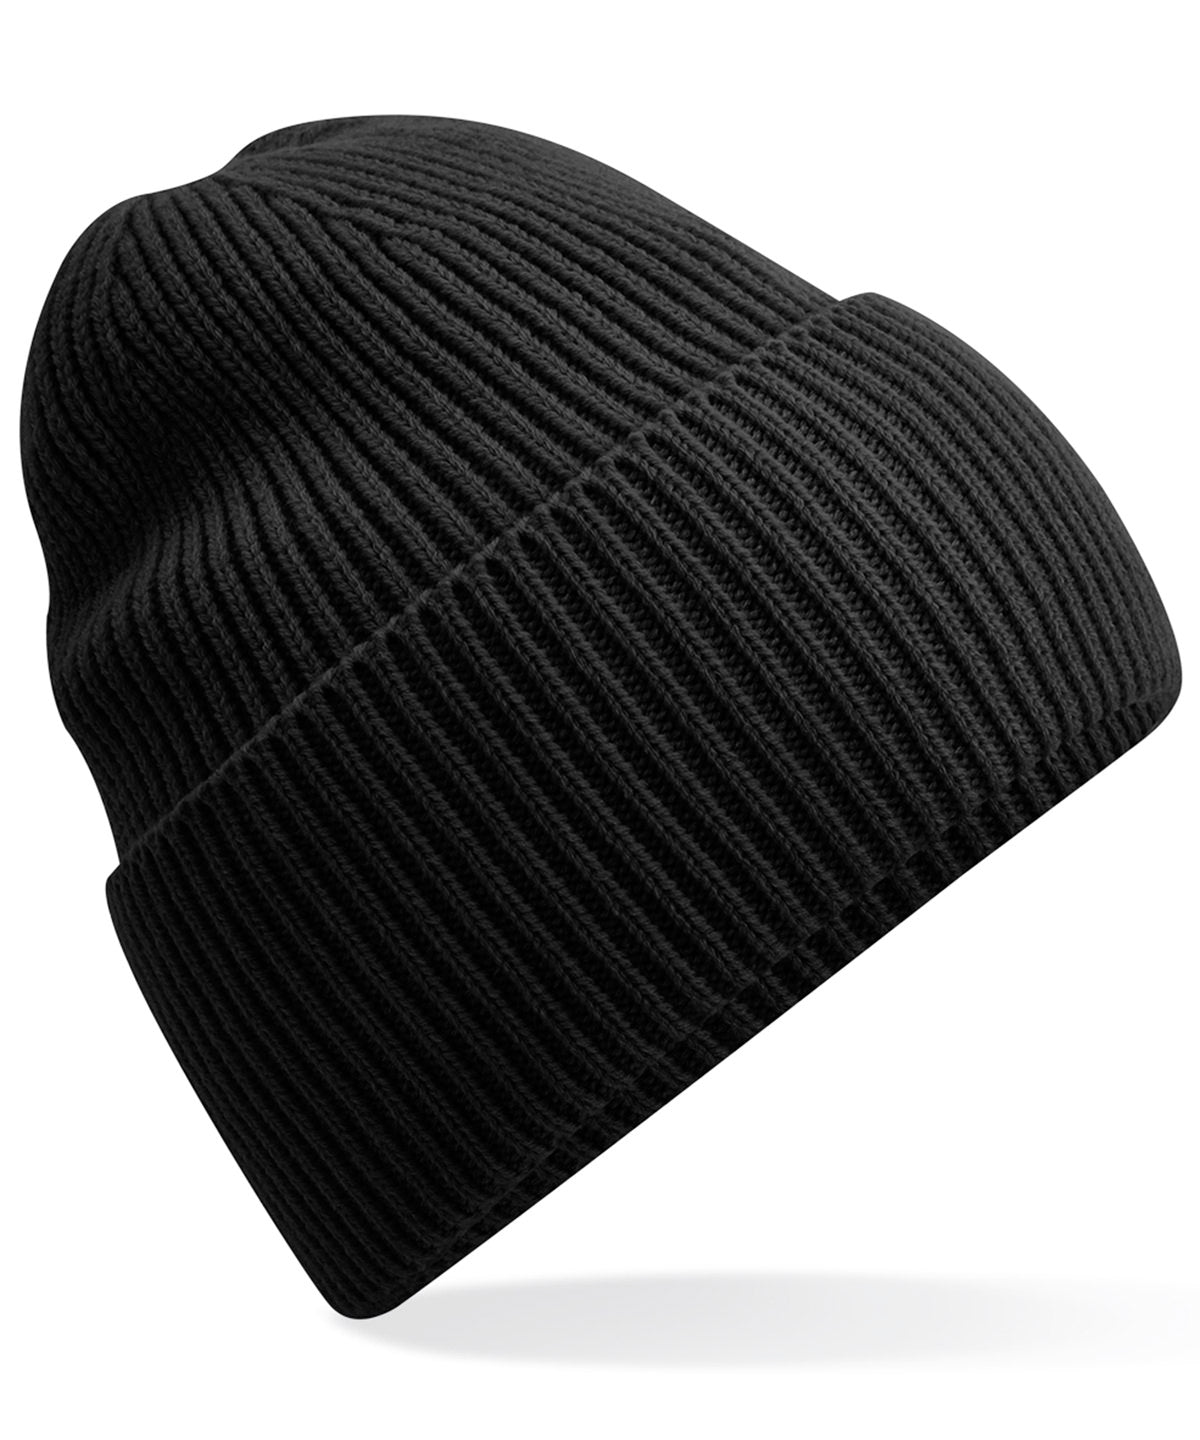 Personalised Hats - Black Beechfield Oversized cuffed beanie